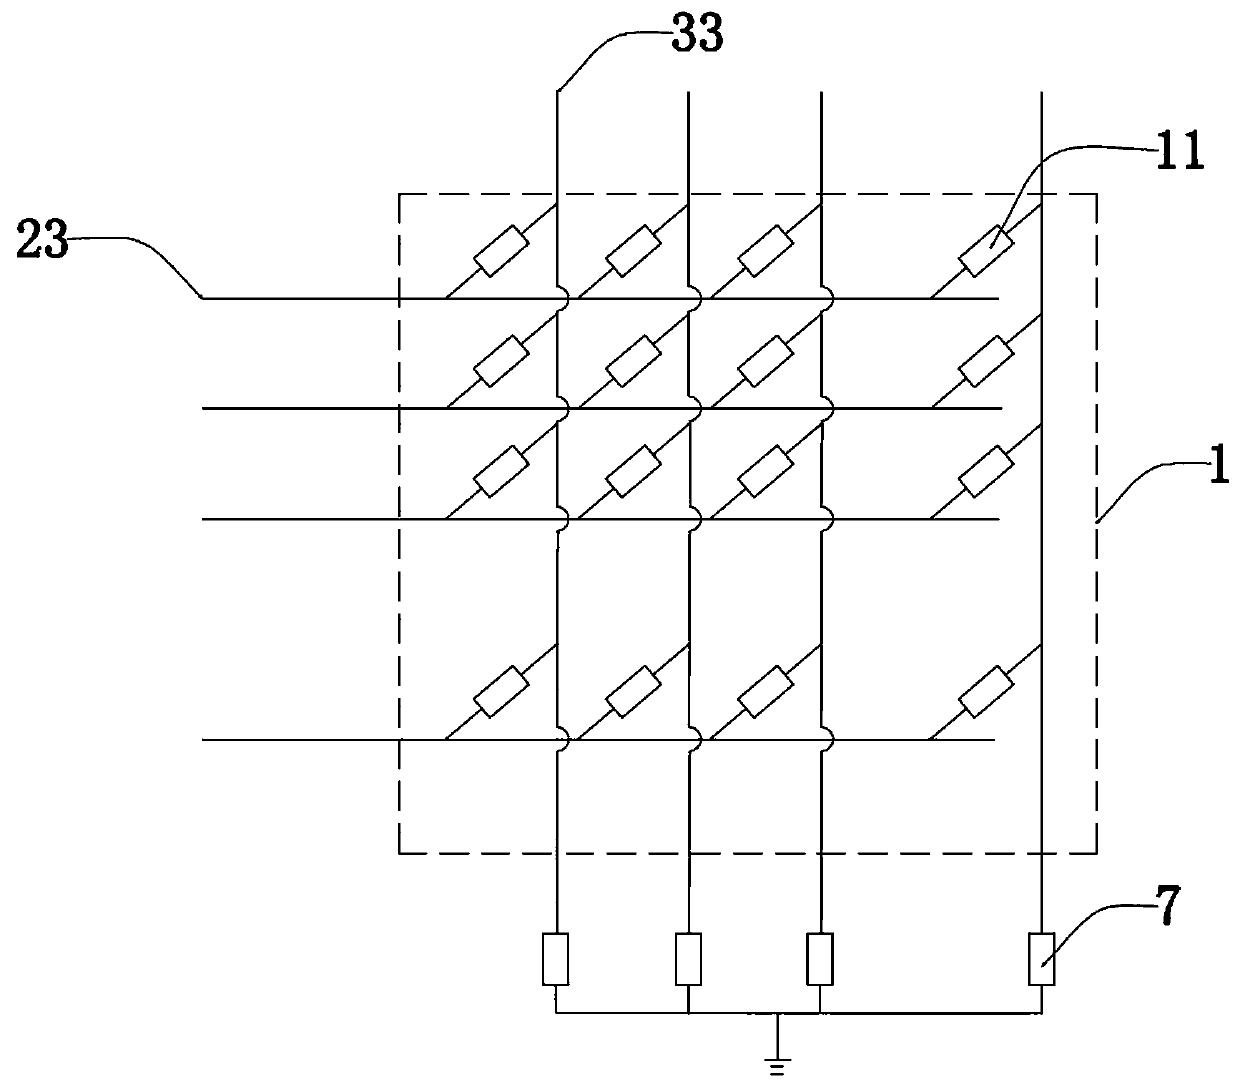 Circuit and method for measuring pressure distribution through piezoresistive sensing array